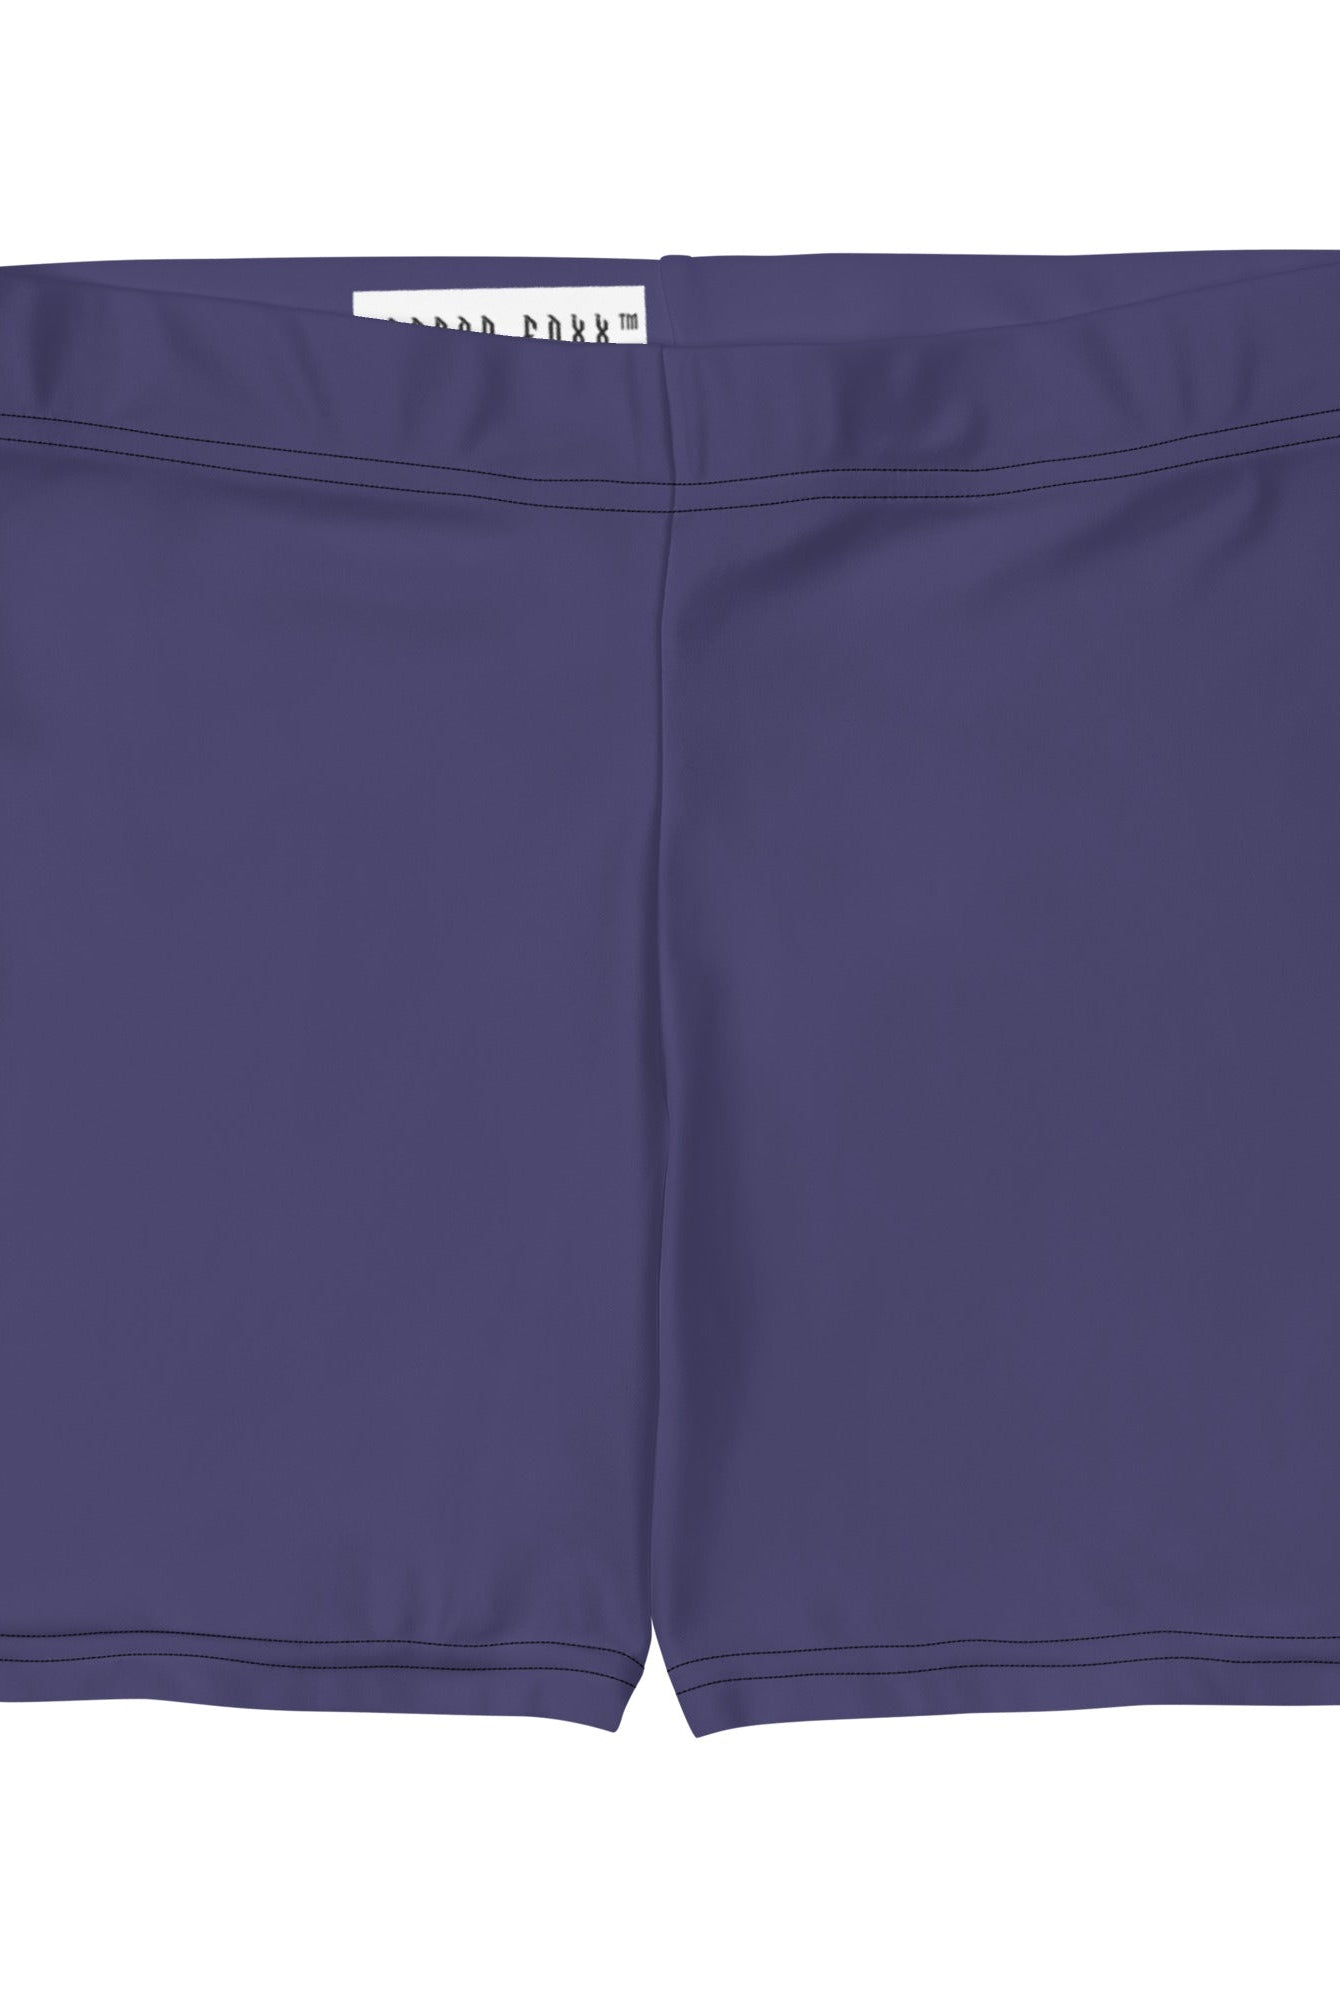 Corn Flower Blue Gym Shorts - Women's Gym Shorts - DRAGON FOXX™ - Corn Flower Blue Gym Shorts - 8990368_9296 - XS - Corn Flower Blue - Gym Shorts - Corn Flower Blue - Corn Flower Blue Gym Shorts - Dragon Foxx™